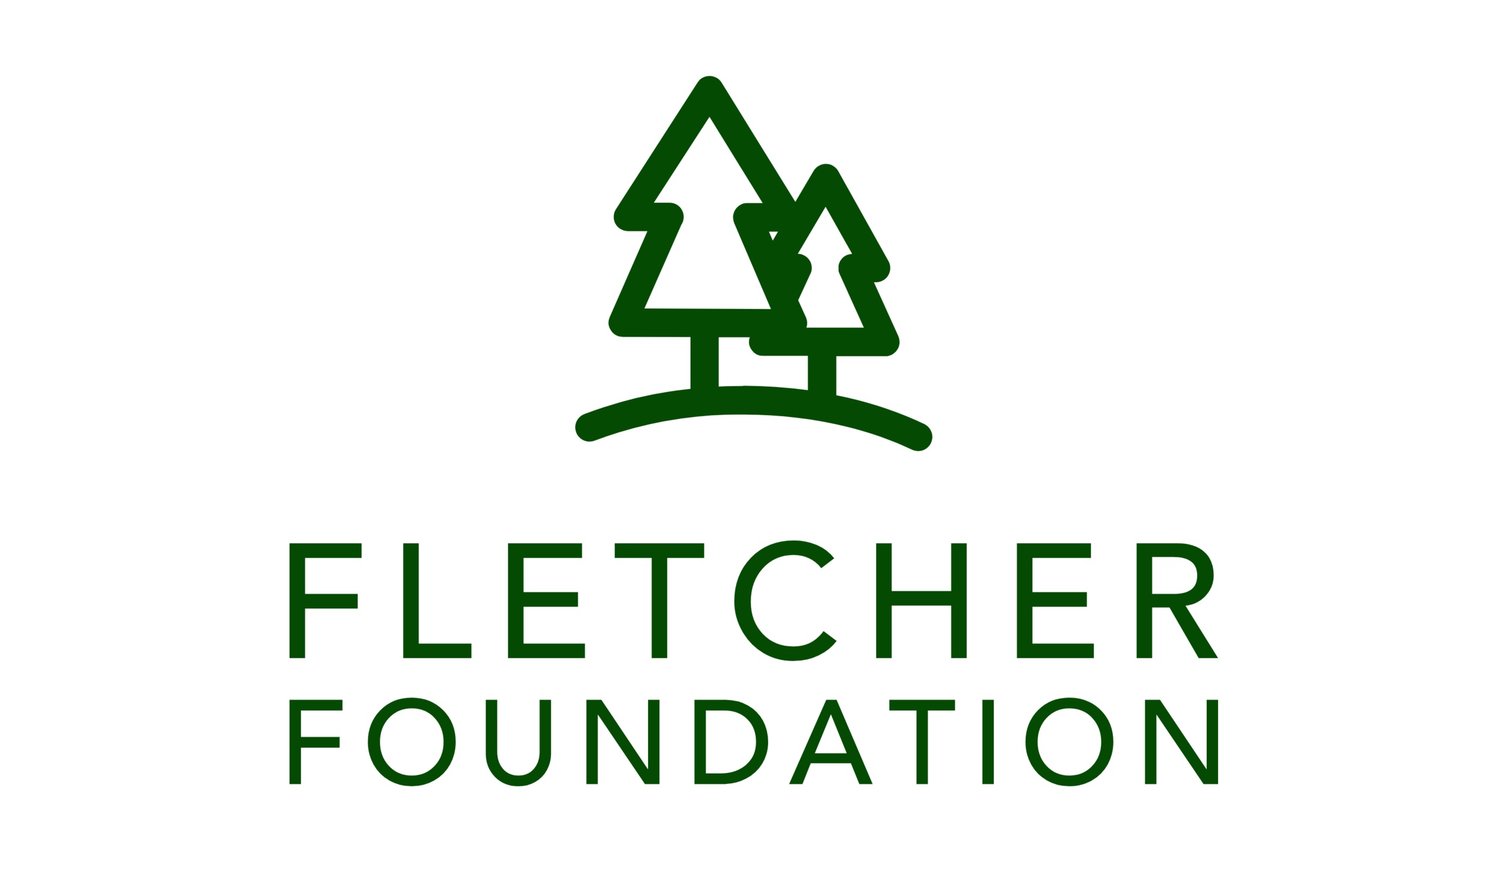 The Fletcher Foundation